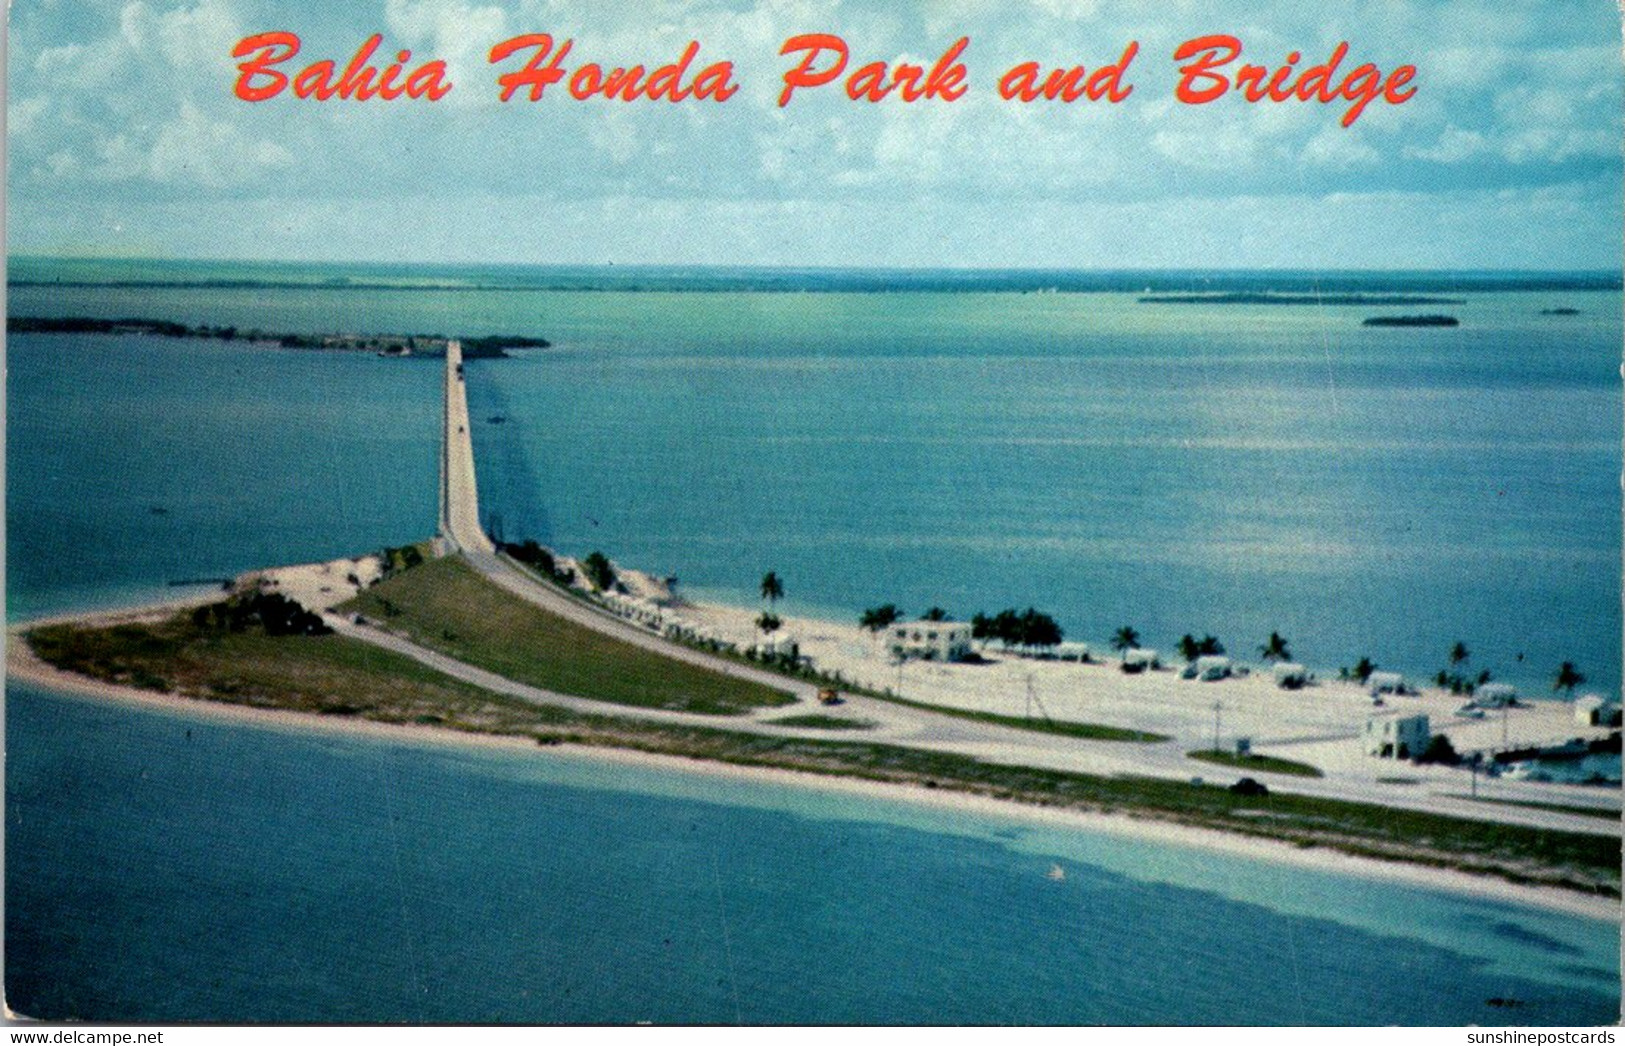 Florida Keys Bahia Honda Park And Bridge - Key West & The Keys